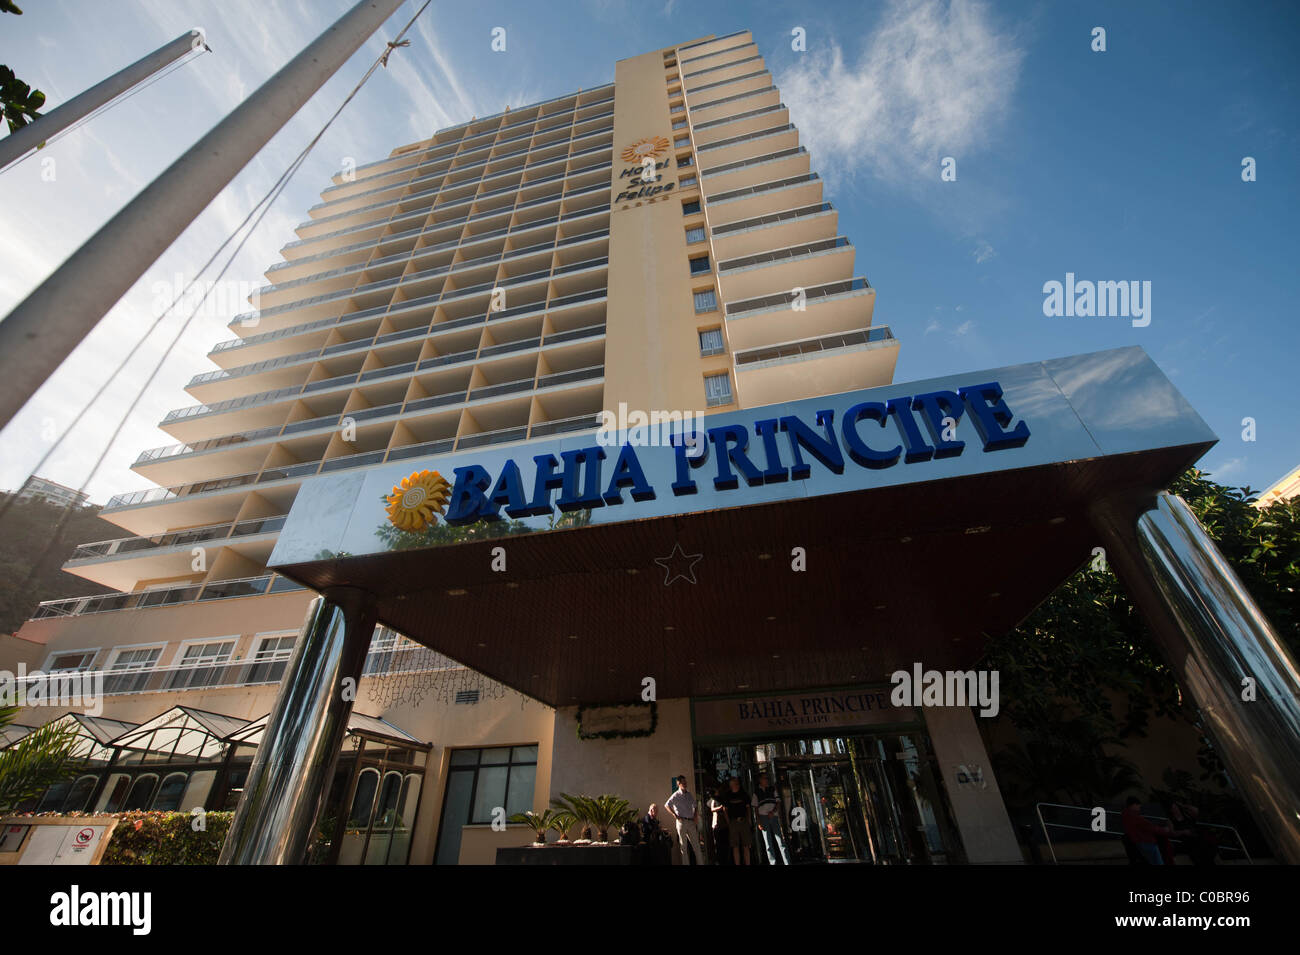 Bahia principe hotel tenerife hi-res stock photography and images - Alamy